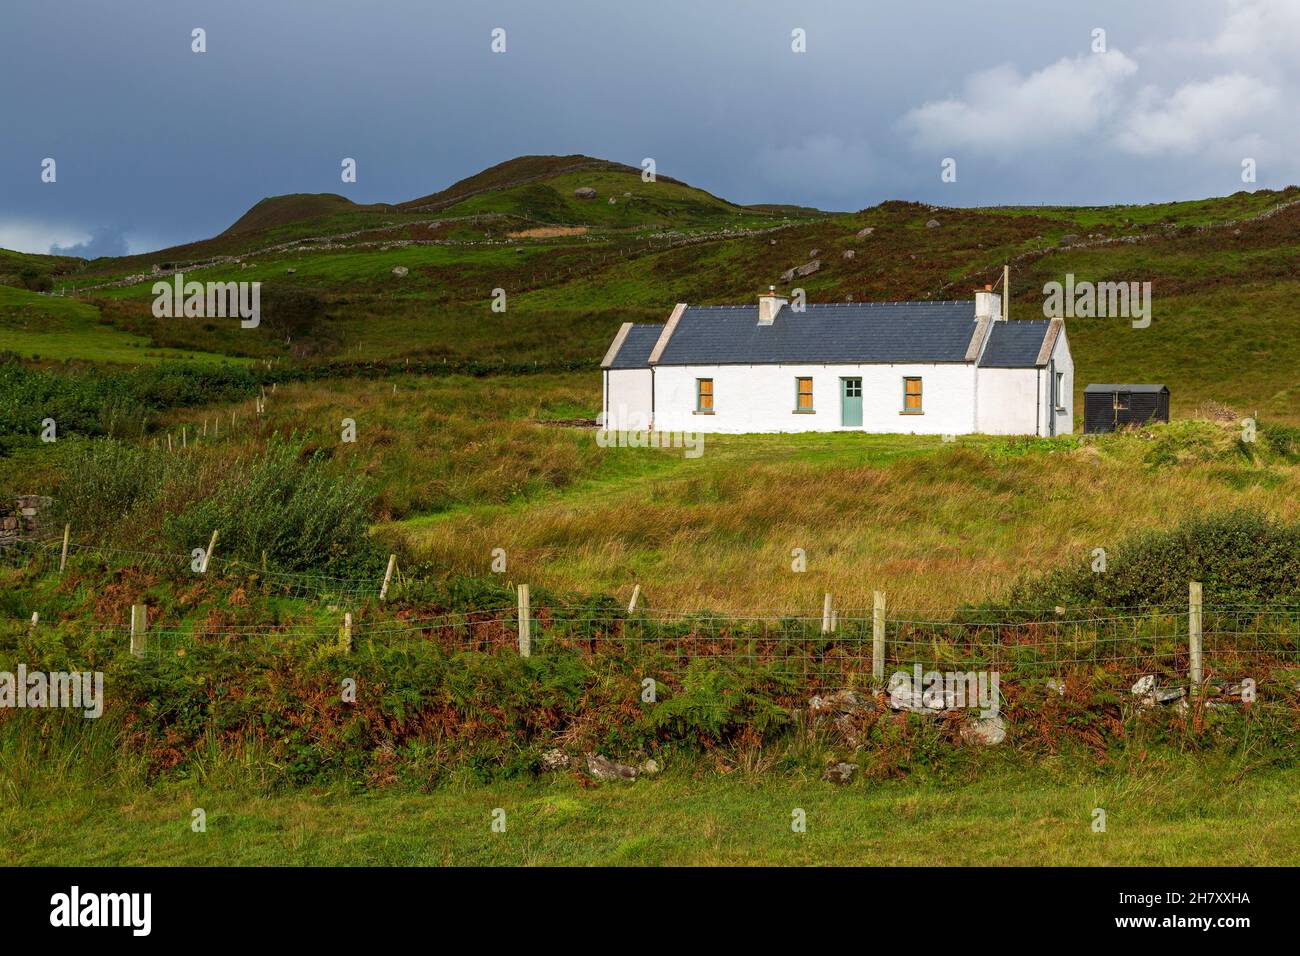 Ballyteney Beg, Clare Island, County Mayo, Irlanda Foto Stock